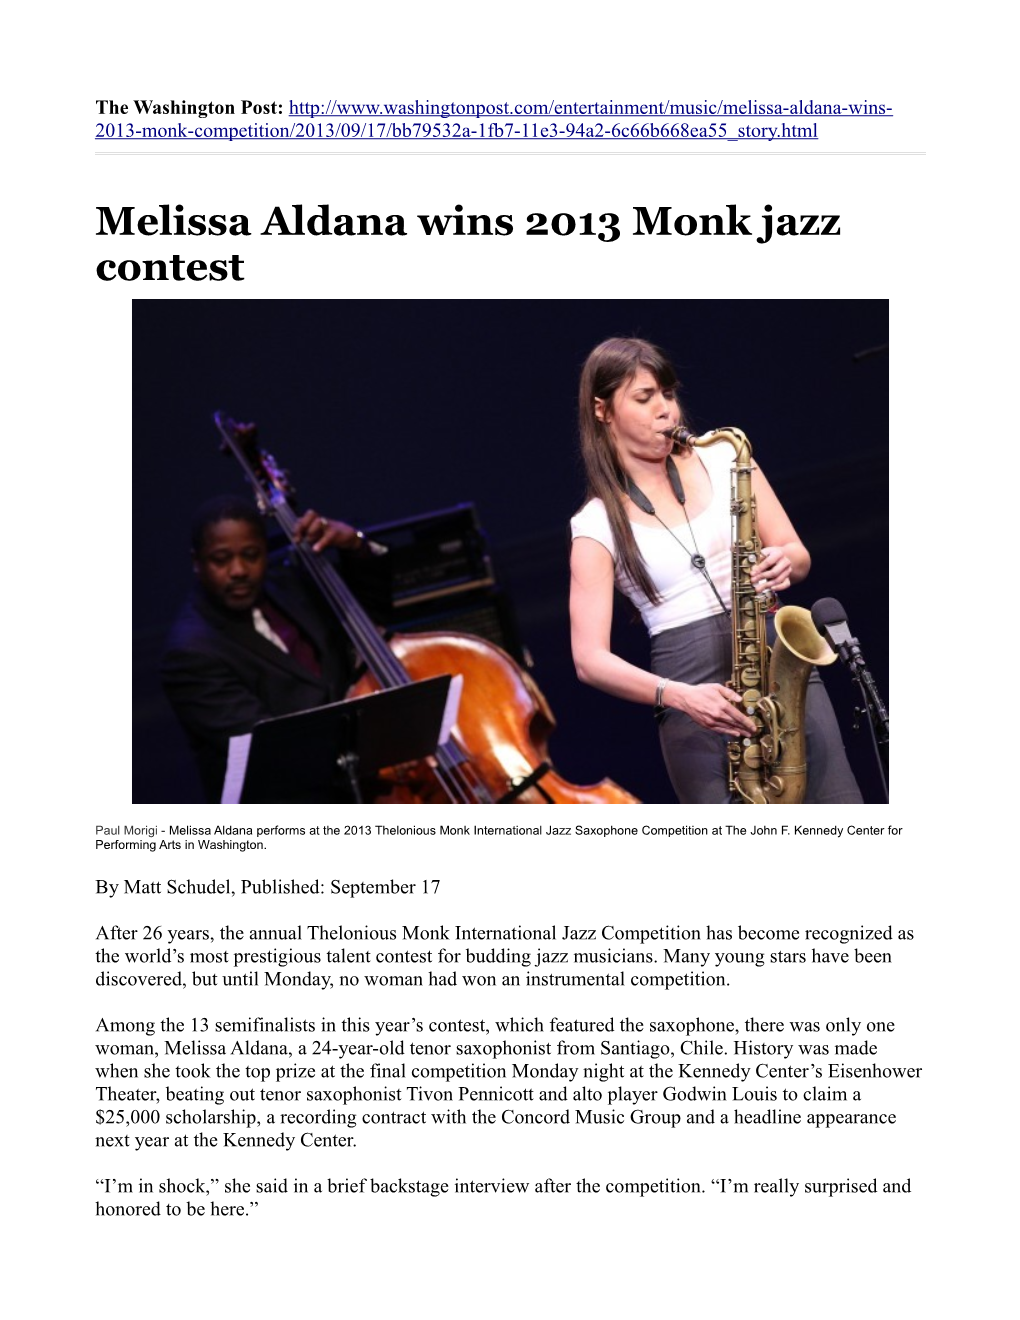 Melissa Aldana Wins 2013 Monk Jazz Contest